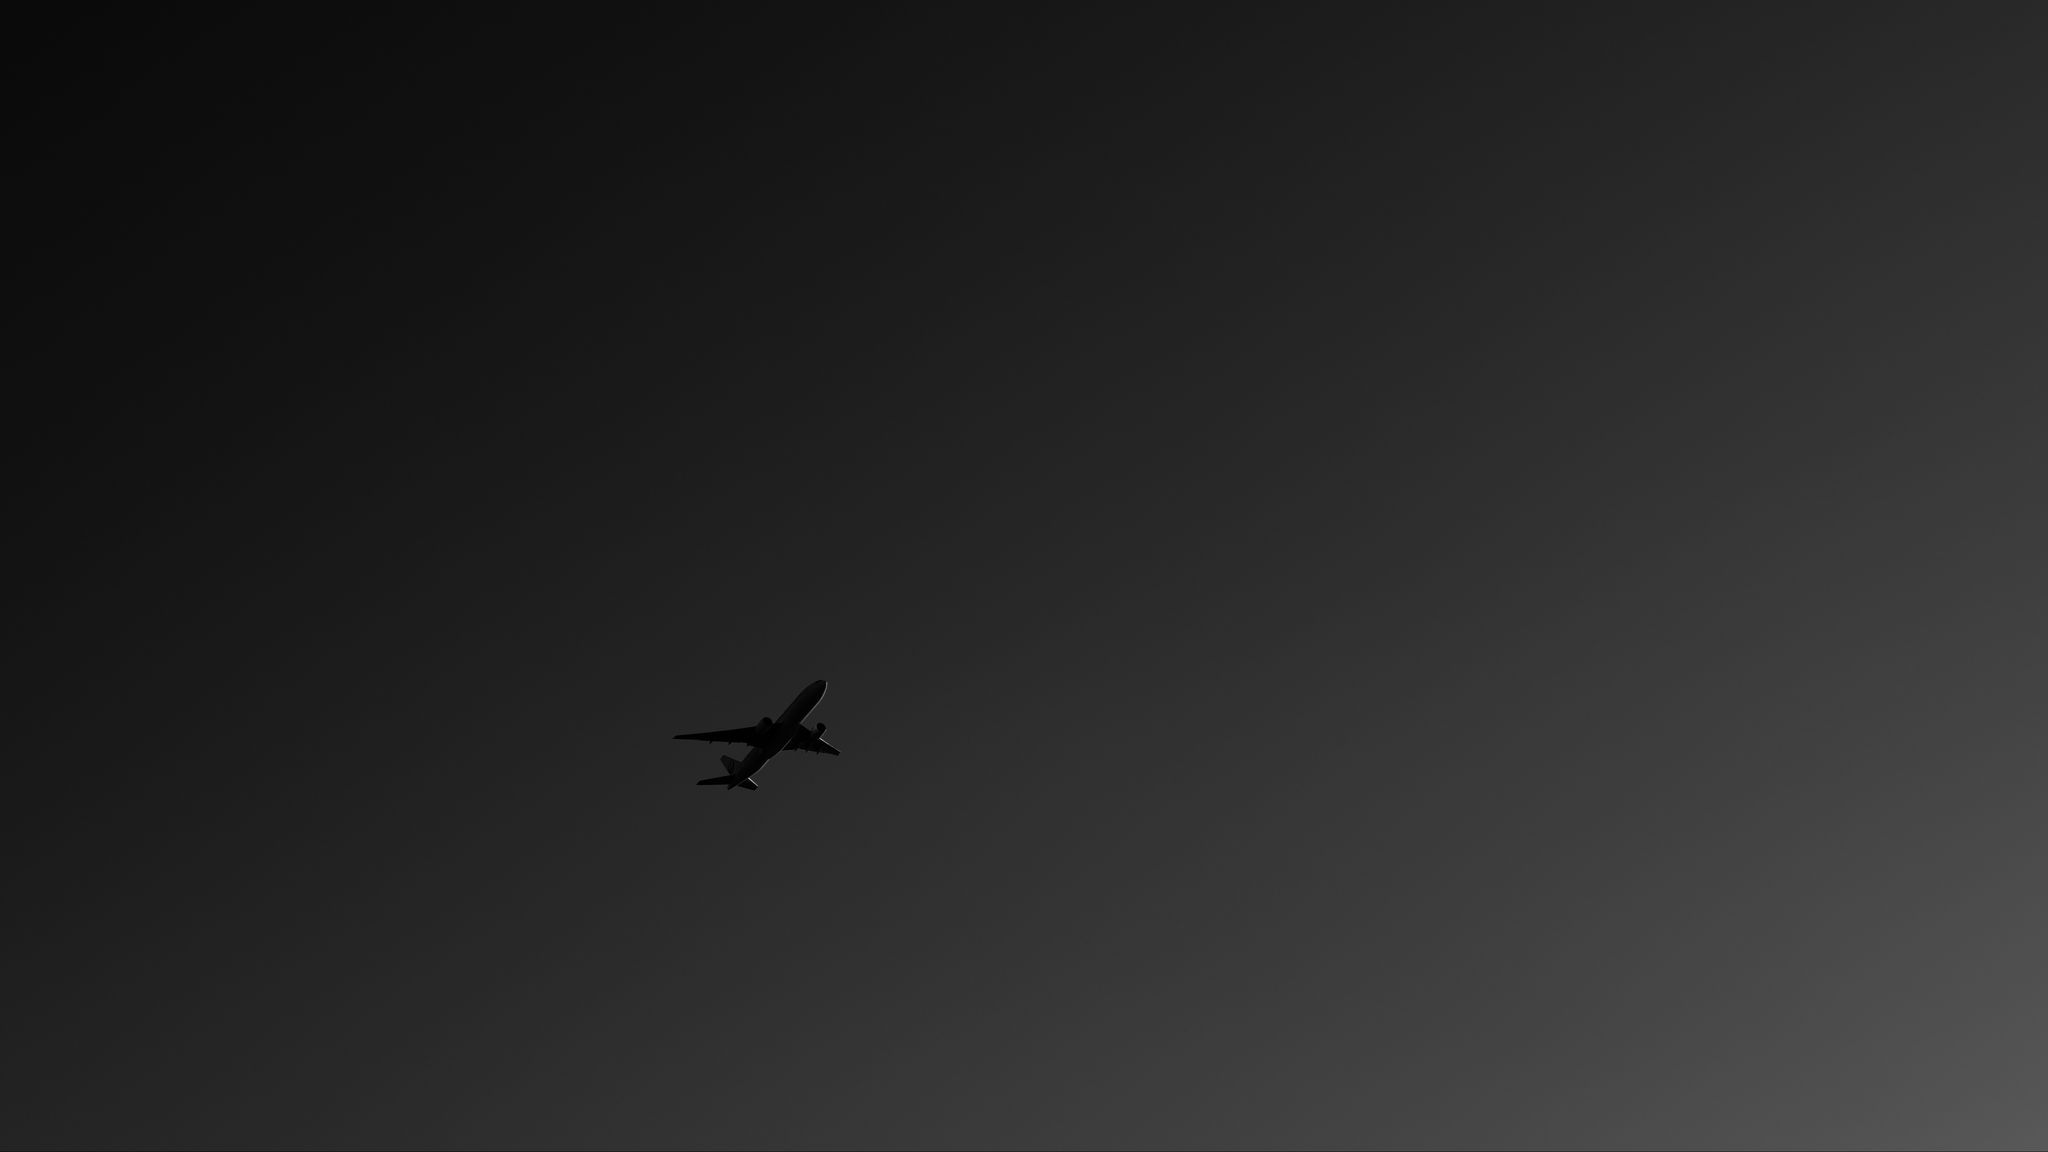 Download wallpaper 2048x1152 plane, bw, sky, flight, dark, minimalism  ultrawide monitor hd background